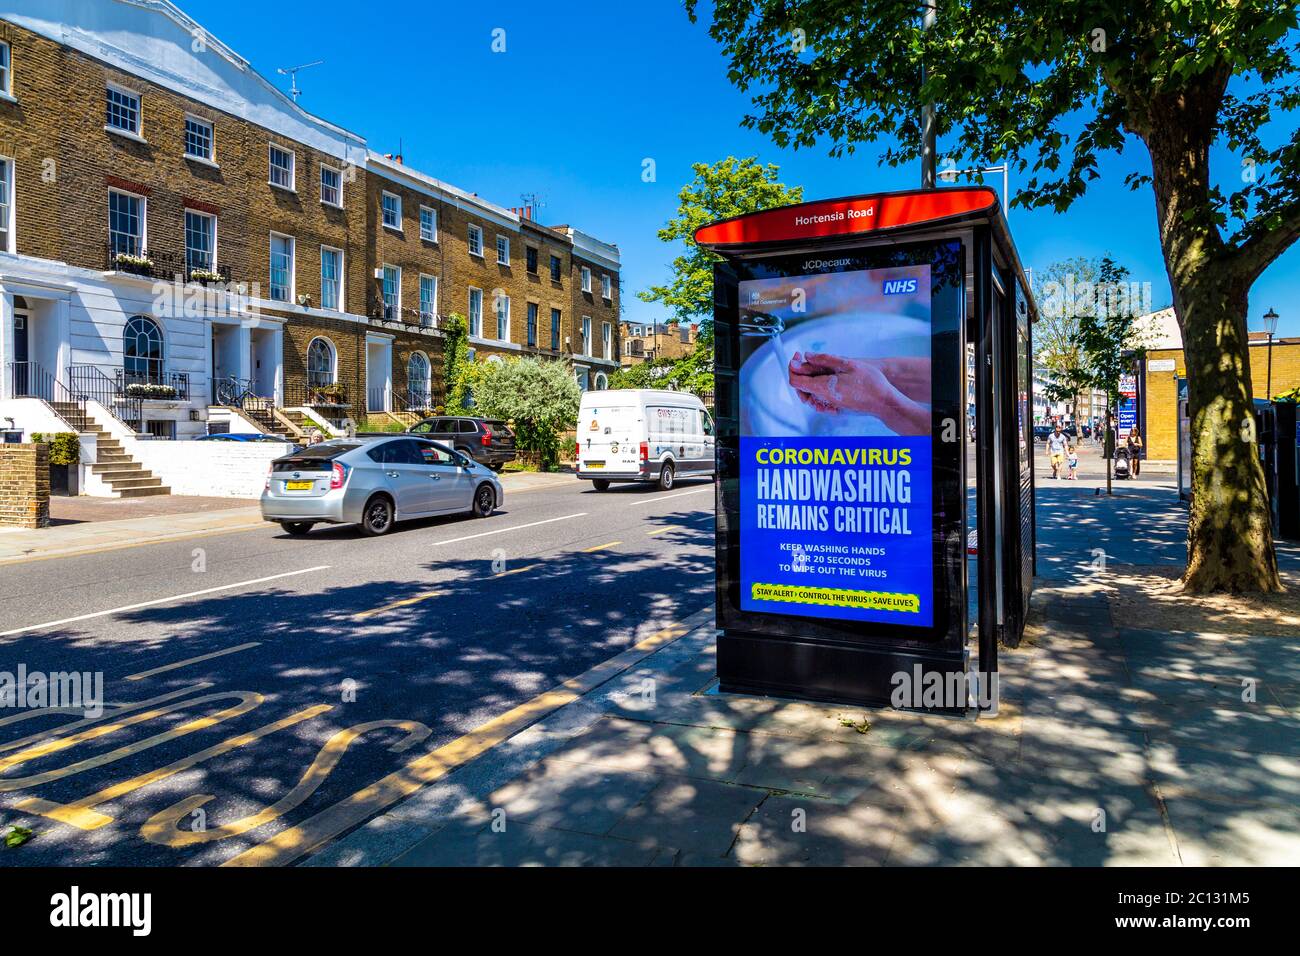 30th May 2020, London, UK - Coronavirus handwashing ad at the bus stop shelter in Chelsea, West London Stock Photo